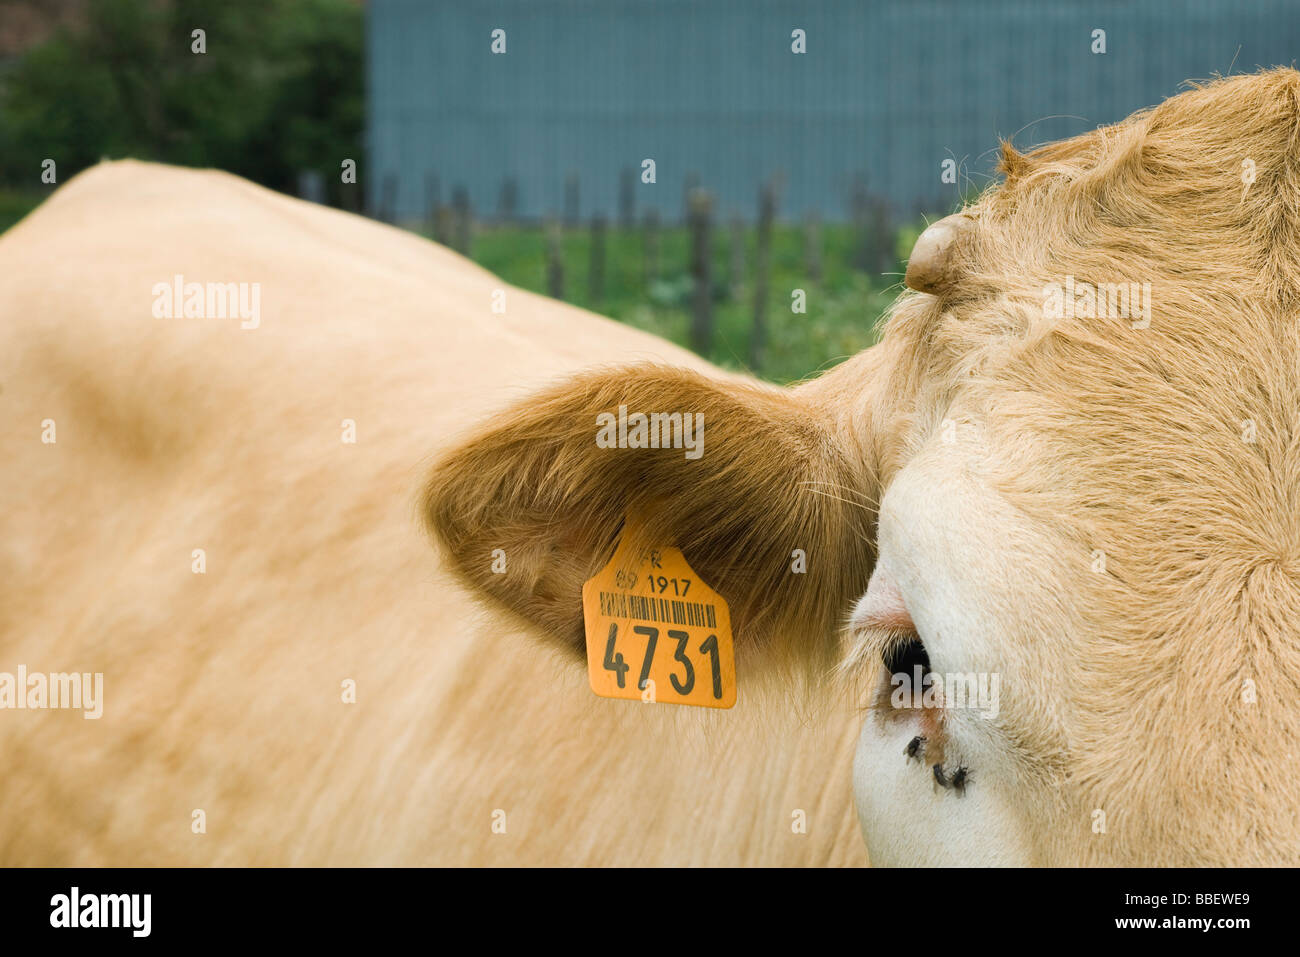 Vaca con oreja, cerca de la etiqueta Foto de stock